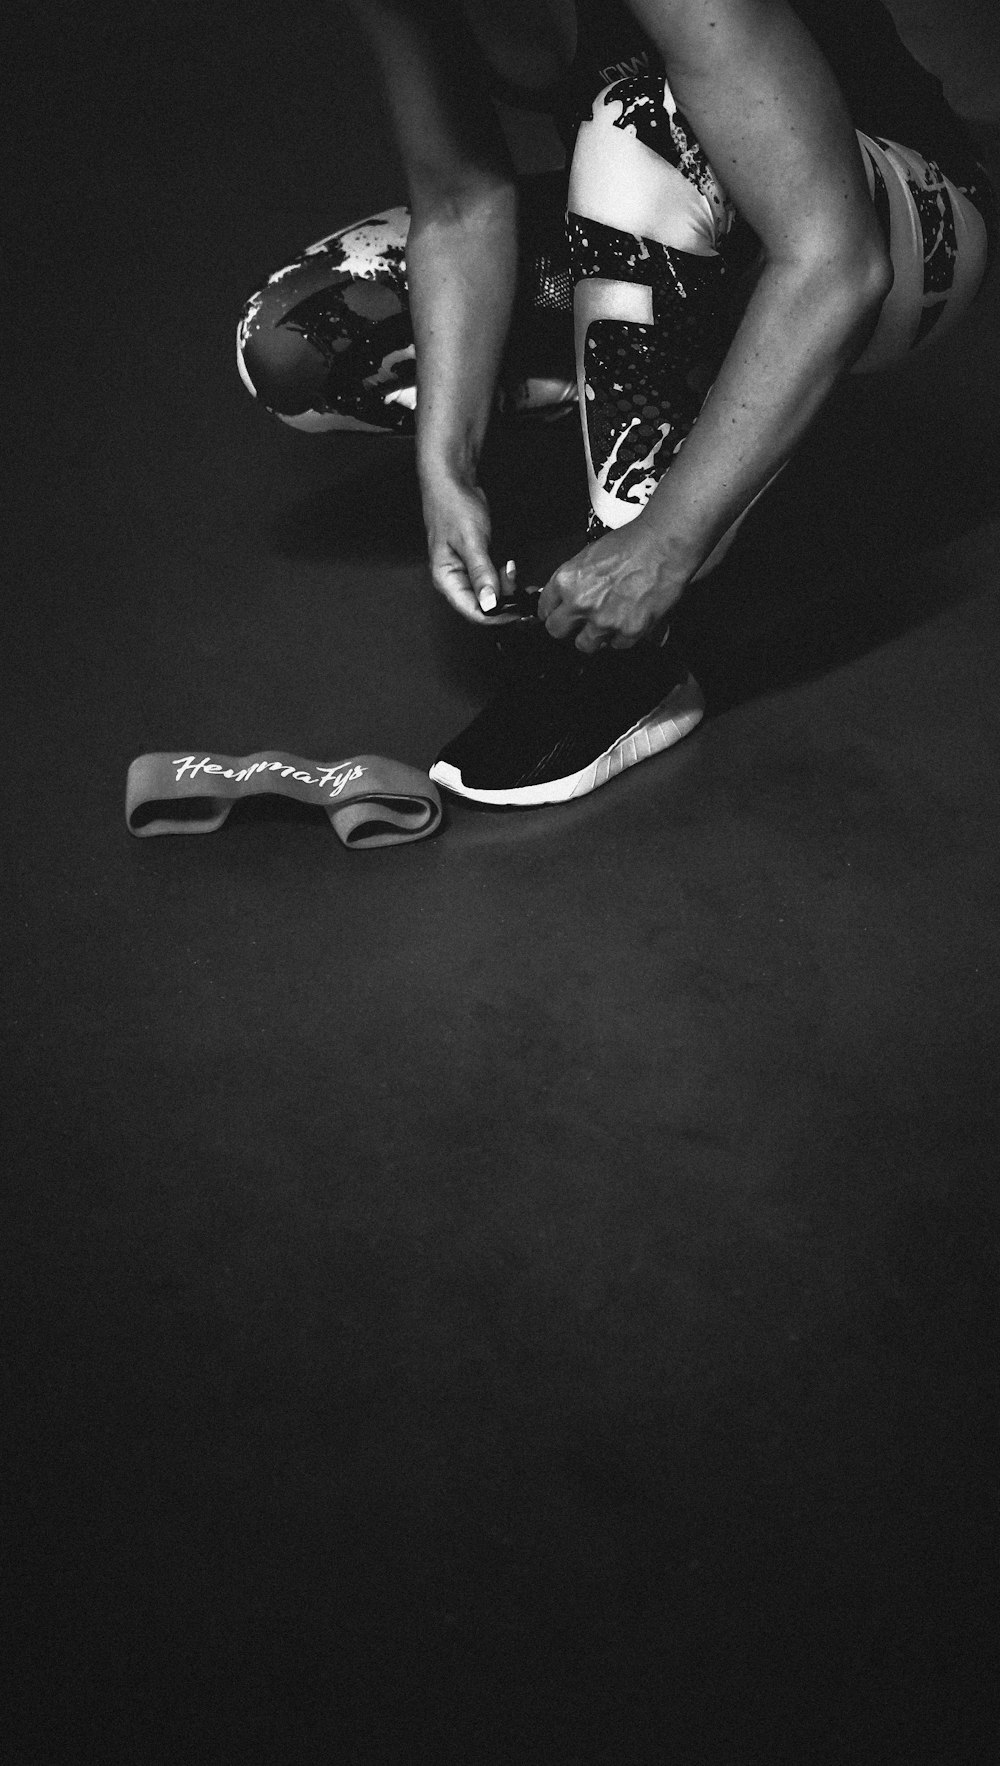 foto in scala di grigi di una persona che indossa scarpe da ginnastica